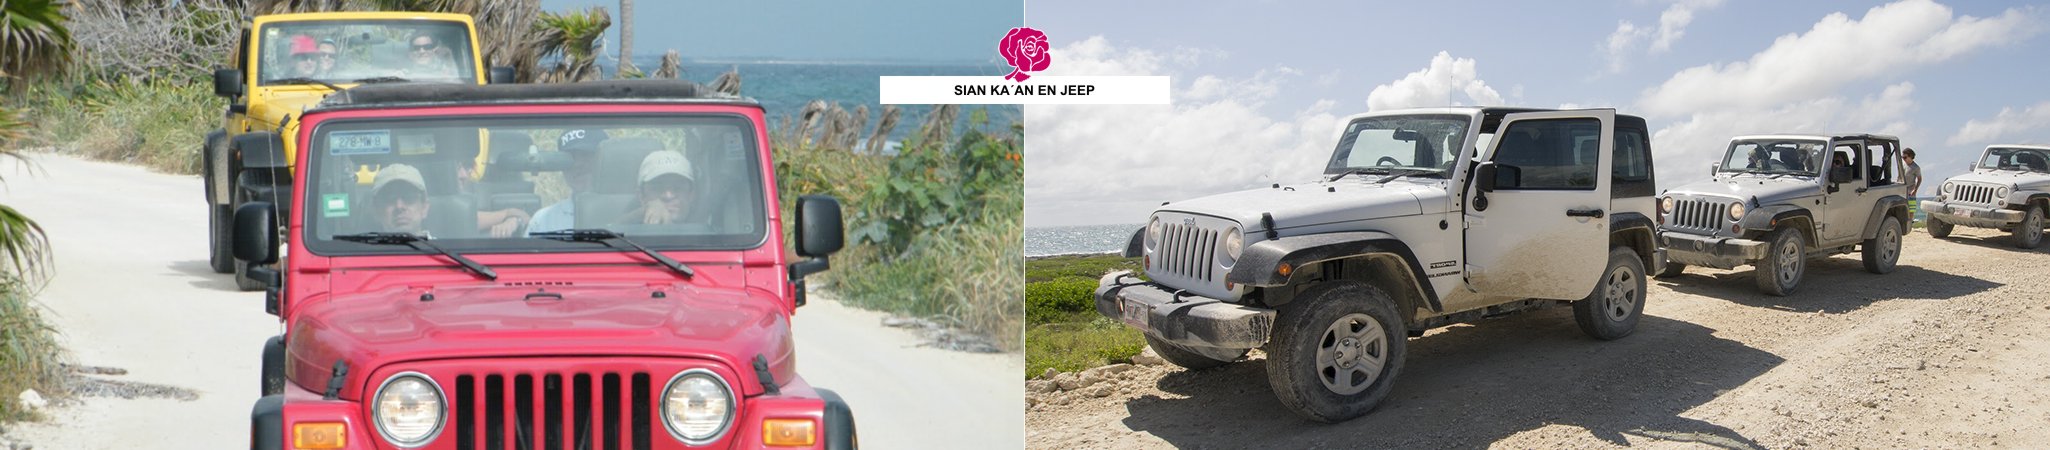 Tour a Sian Kaan en Jeep